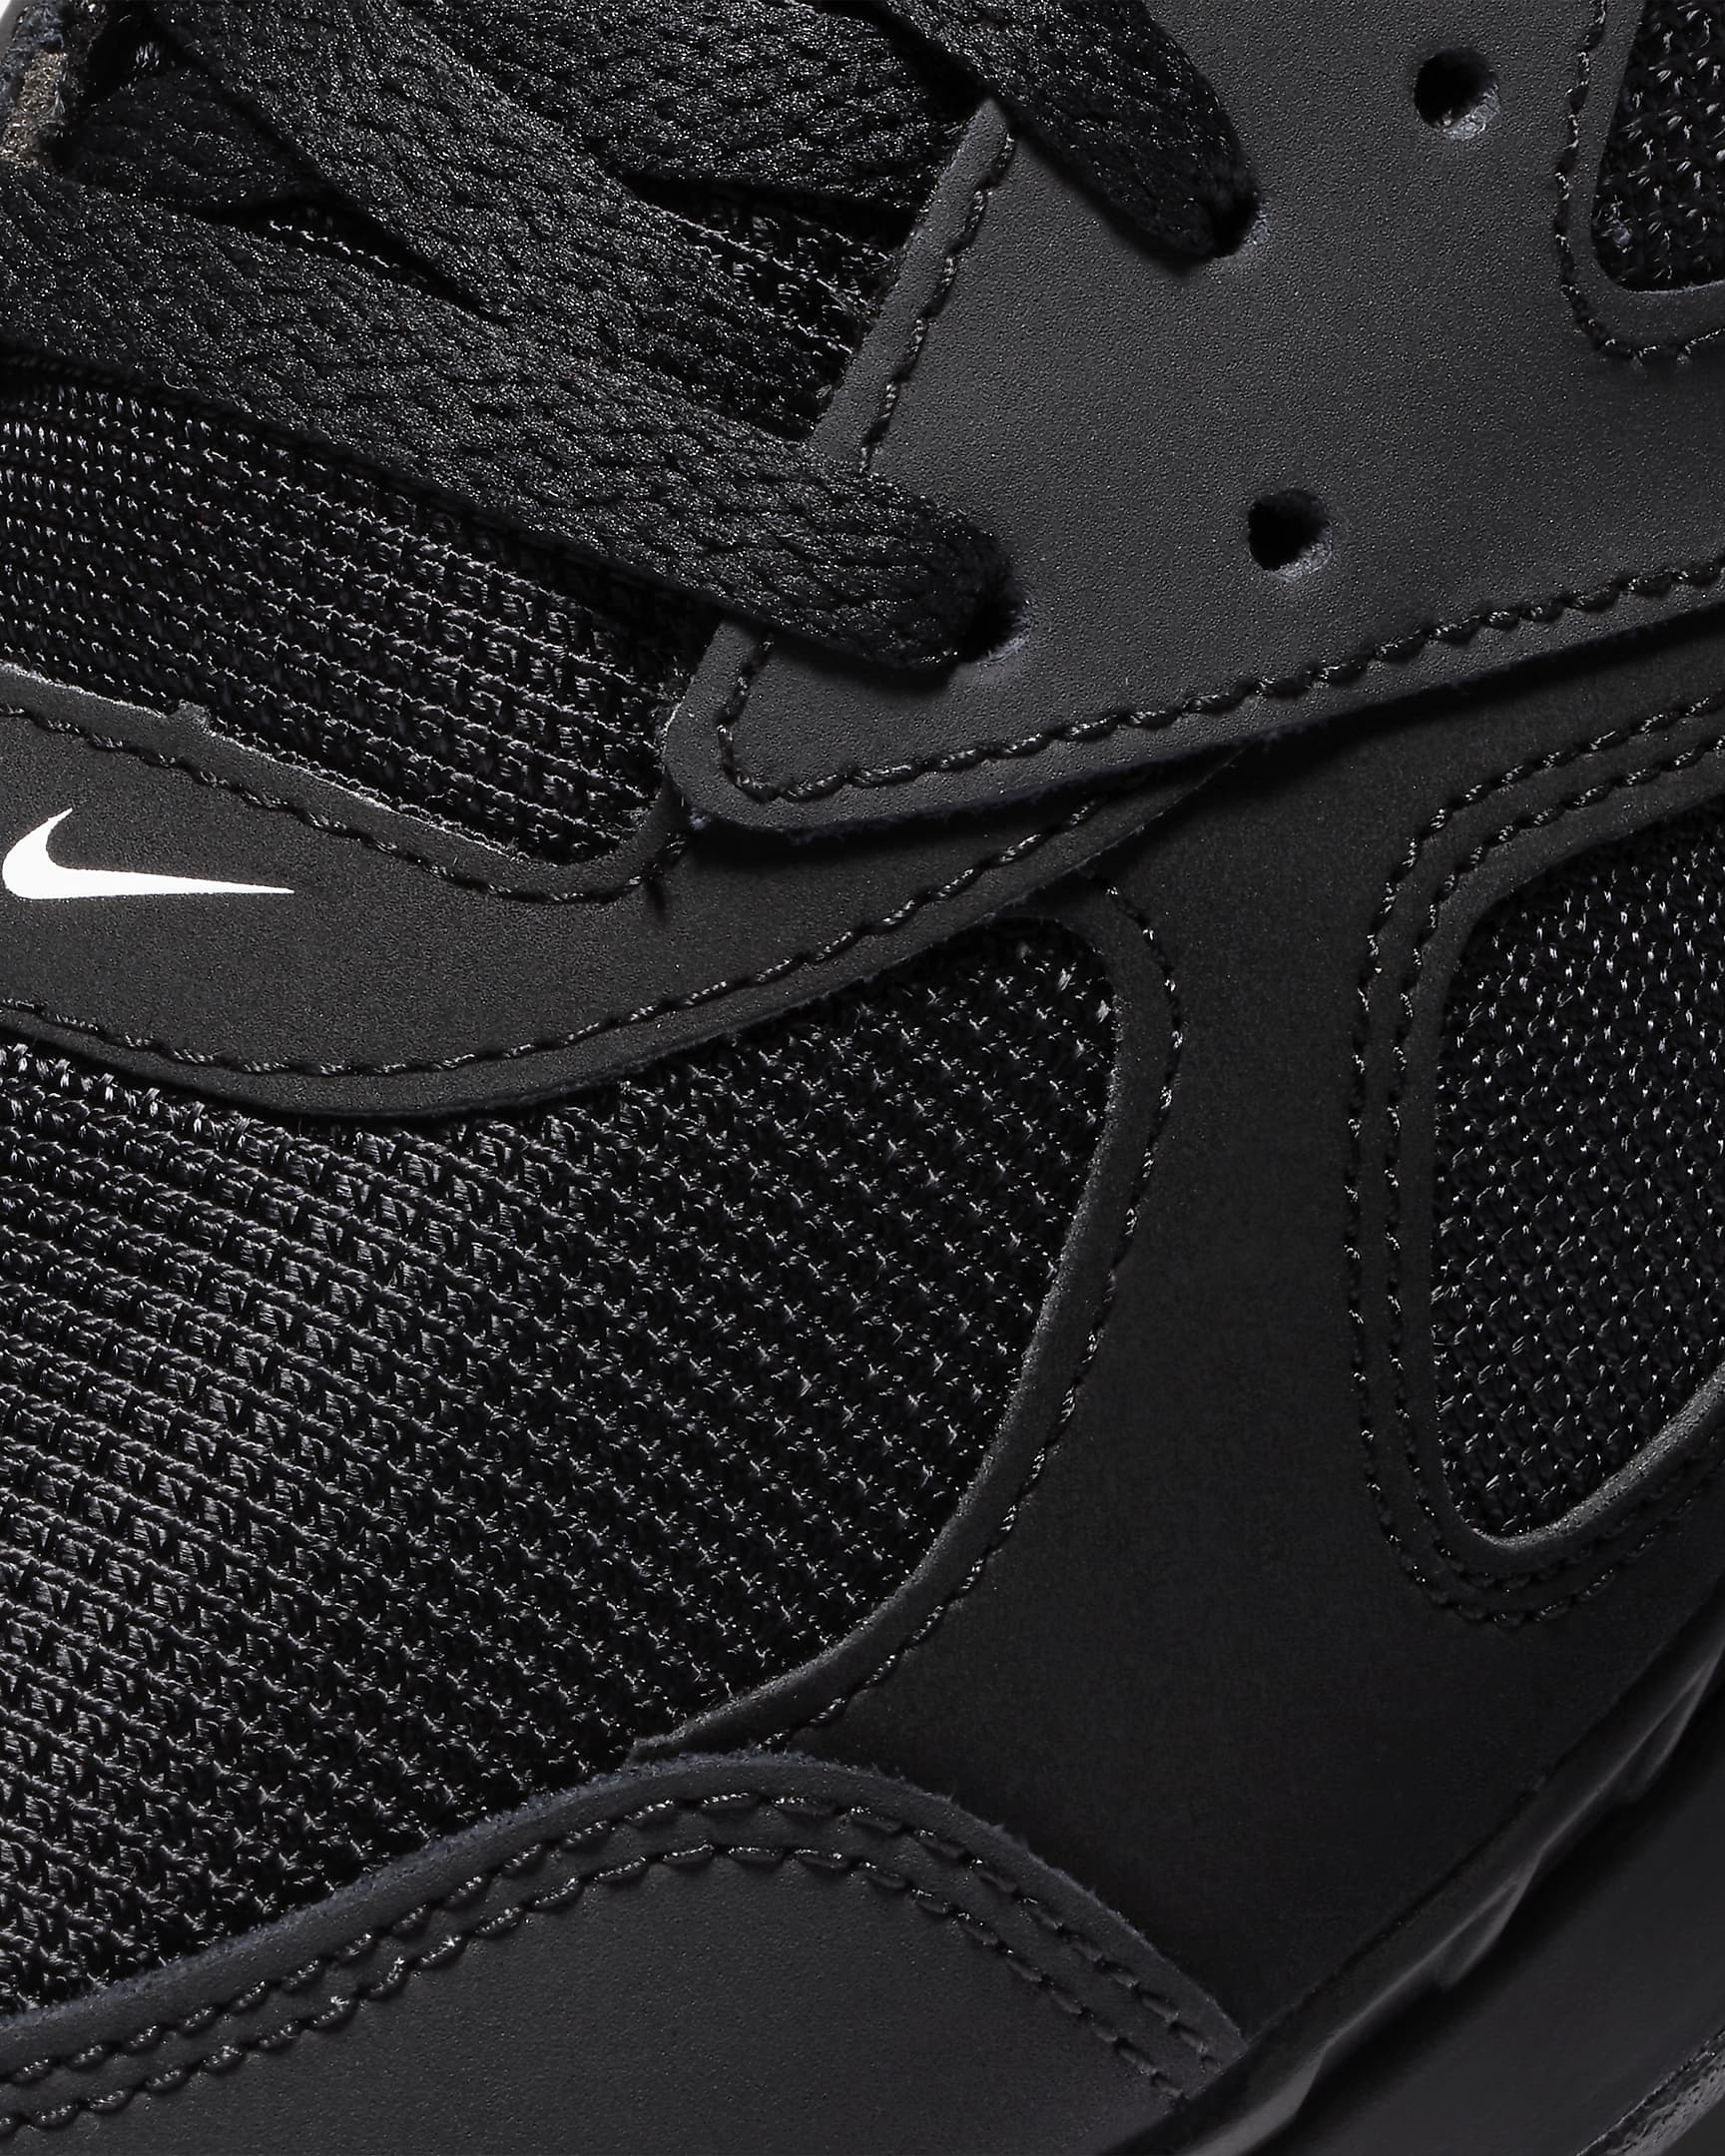 Nike Air Max IVO Men's Shoe - Black/Black/White